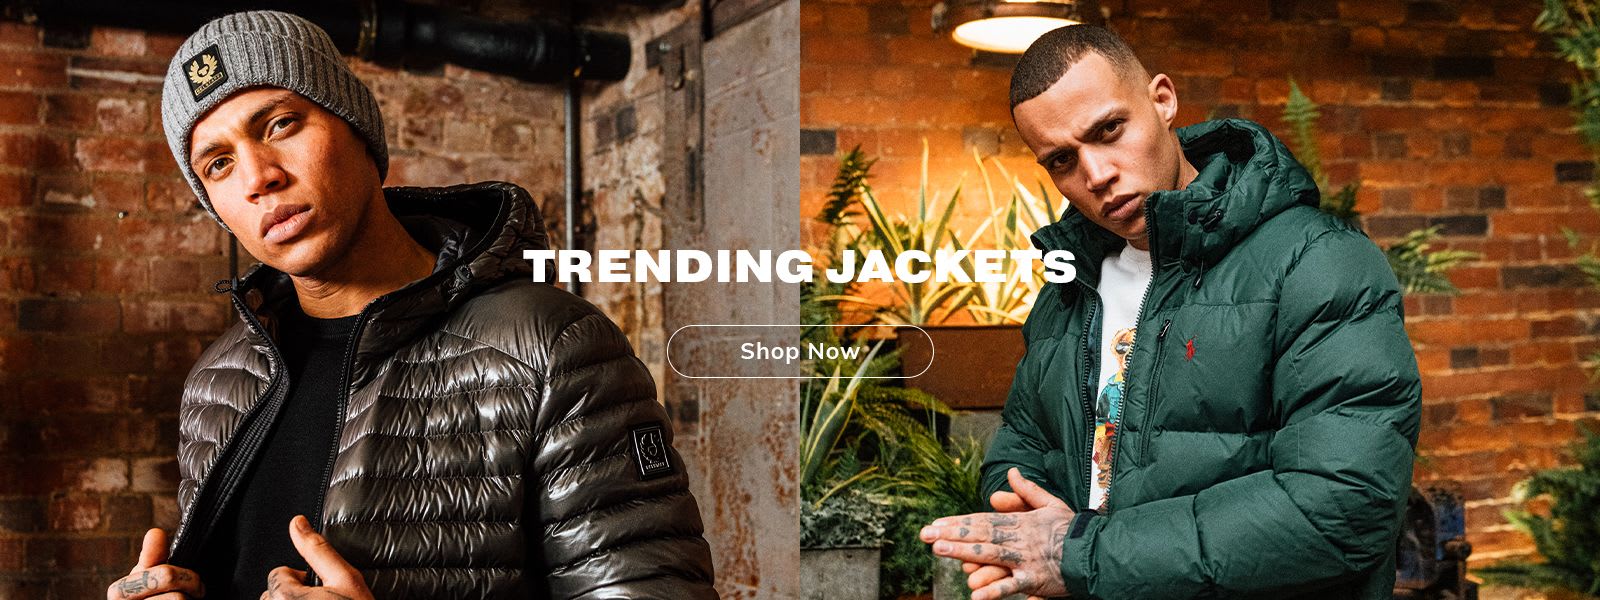 Trending Jackets - Shop Now